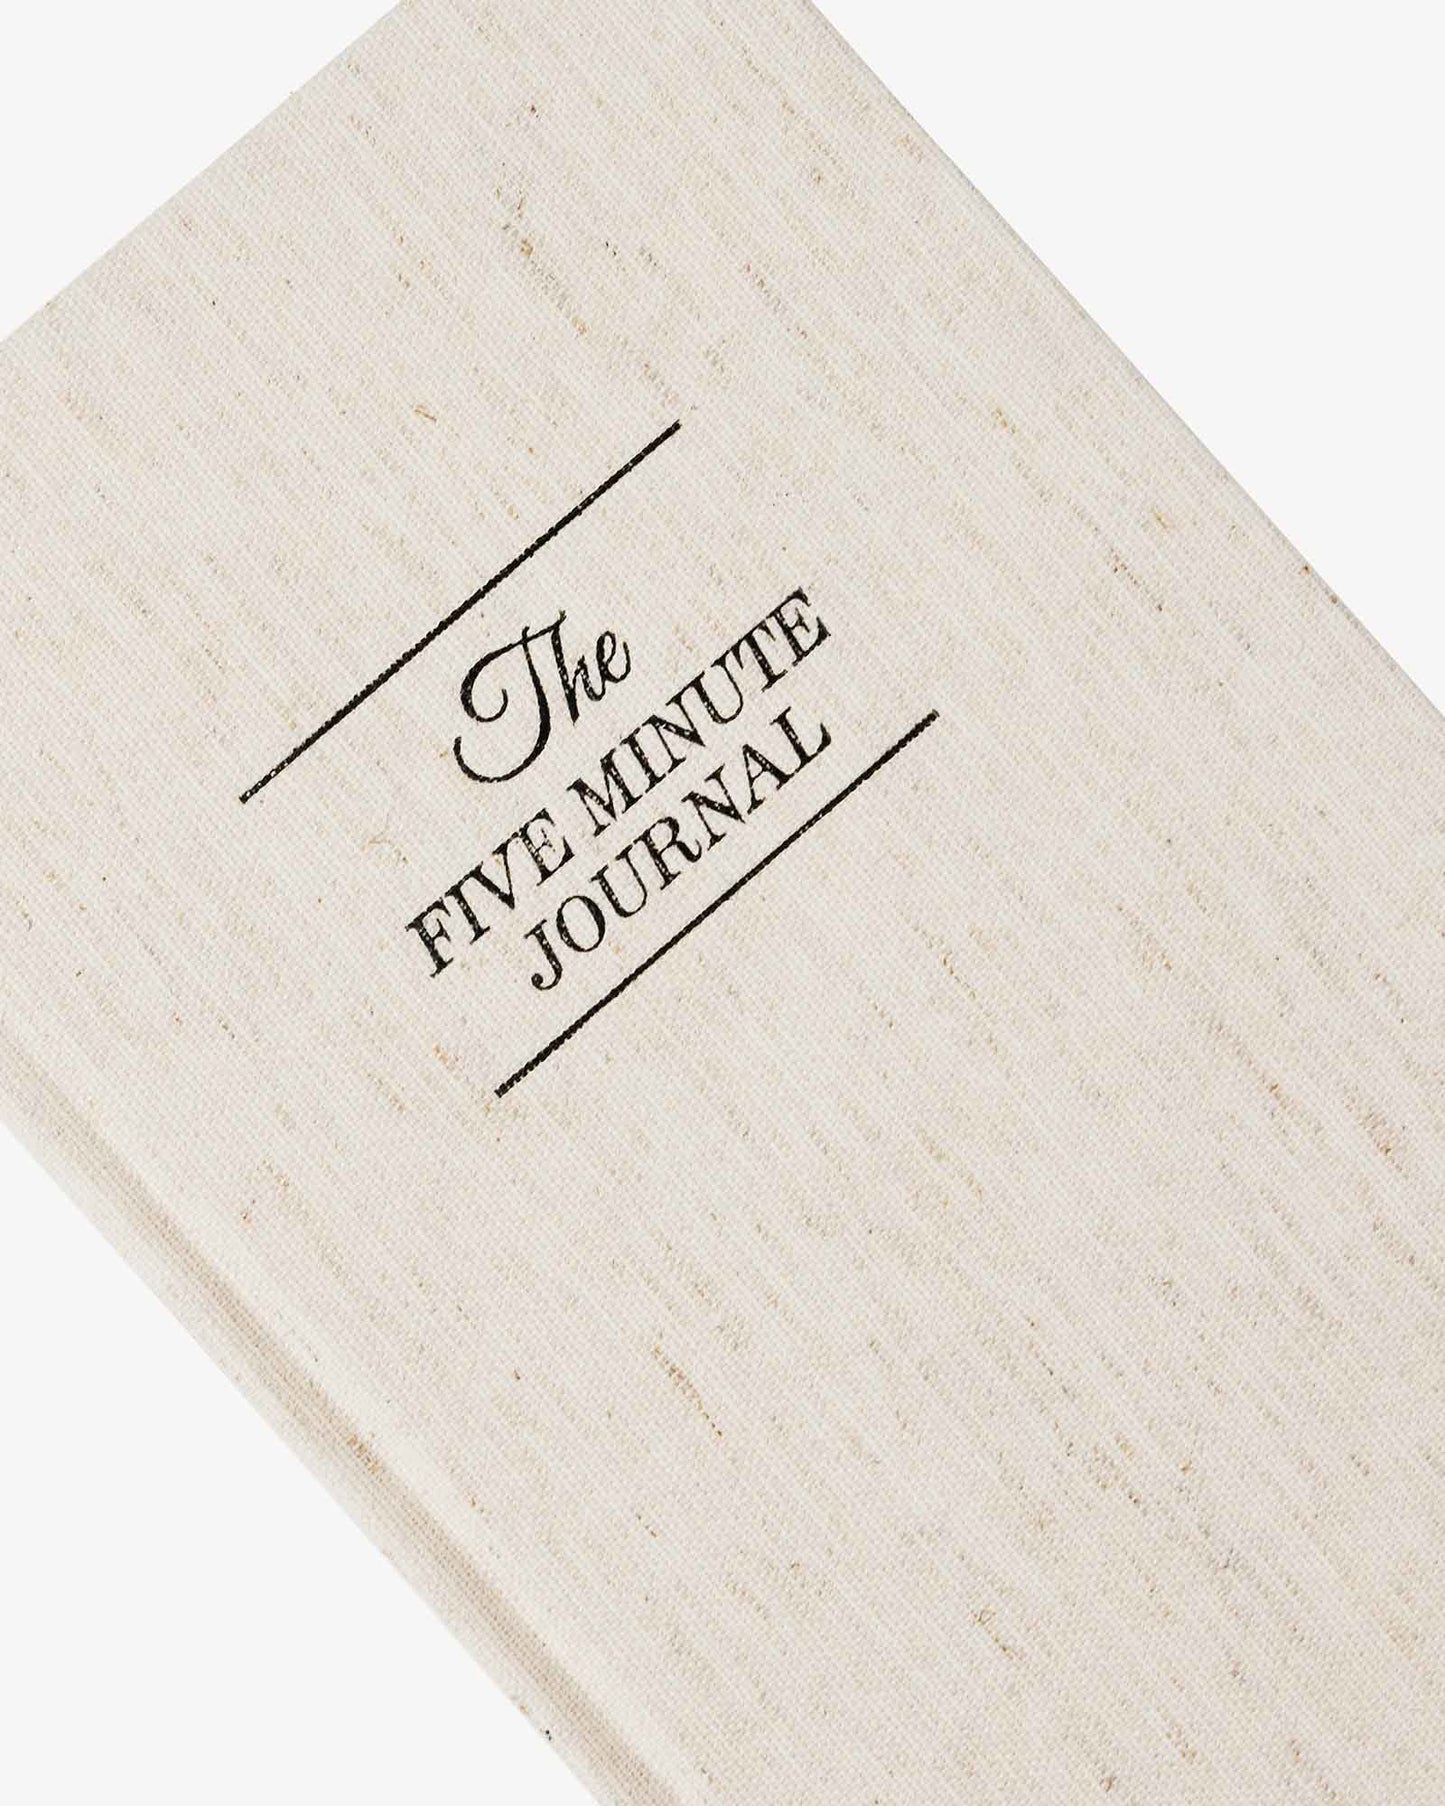 The Five Minute Journal - Original Linen by Intelligent Change